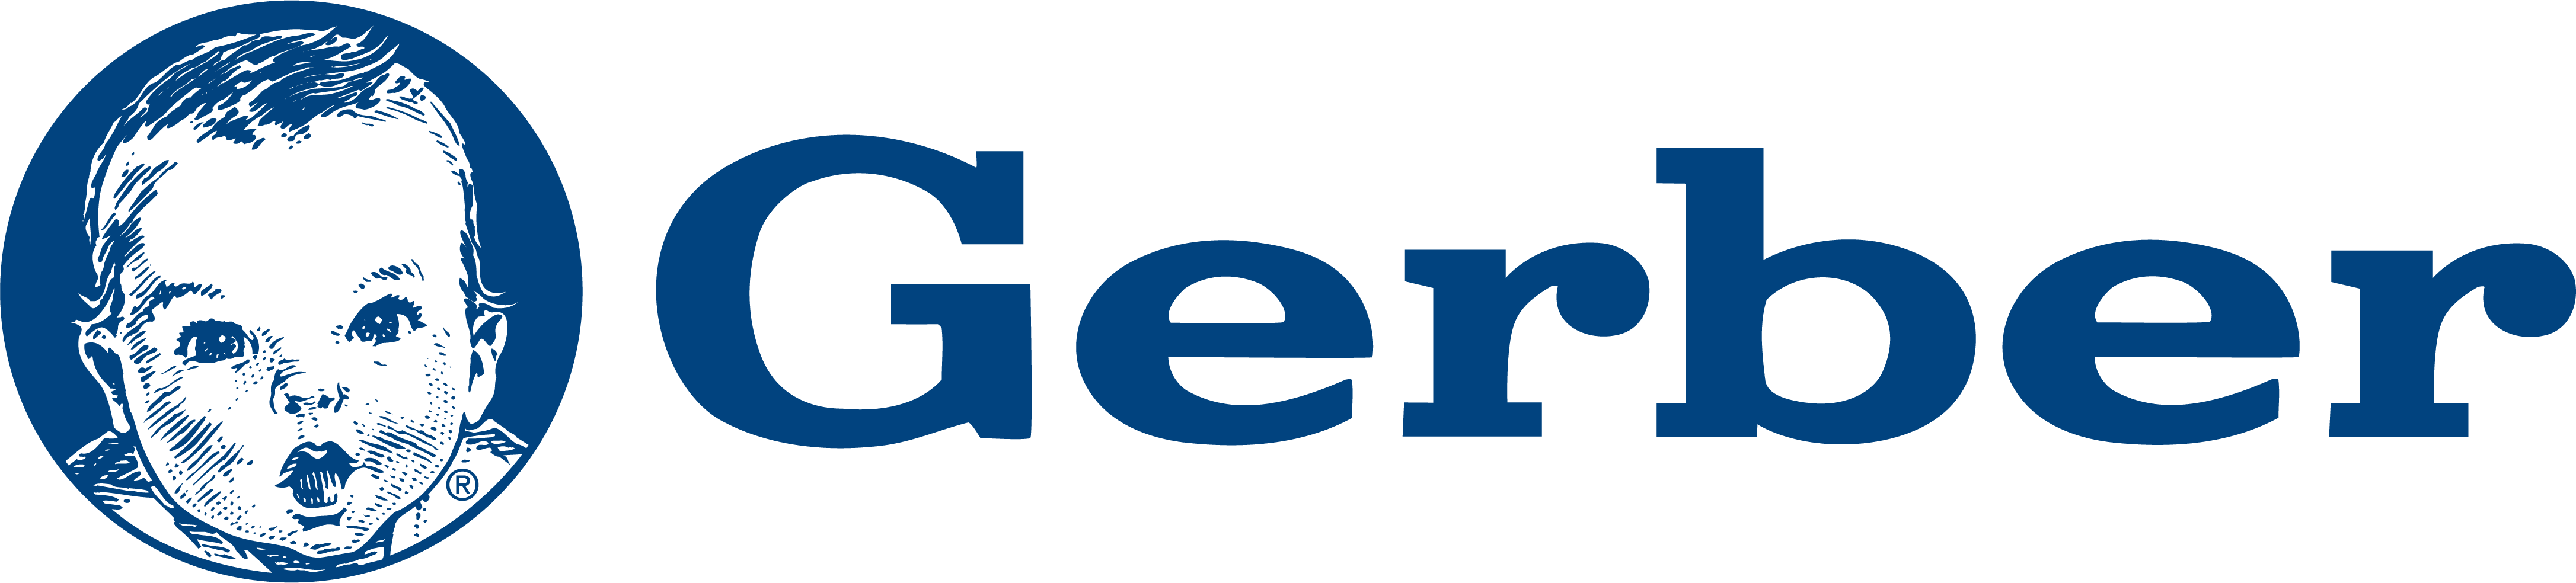 Gerber Medicare Supplement Insurance